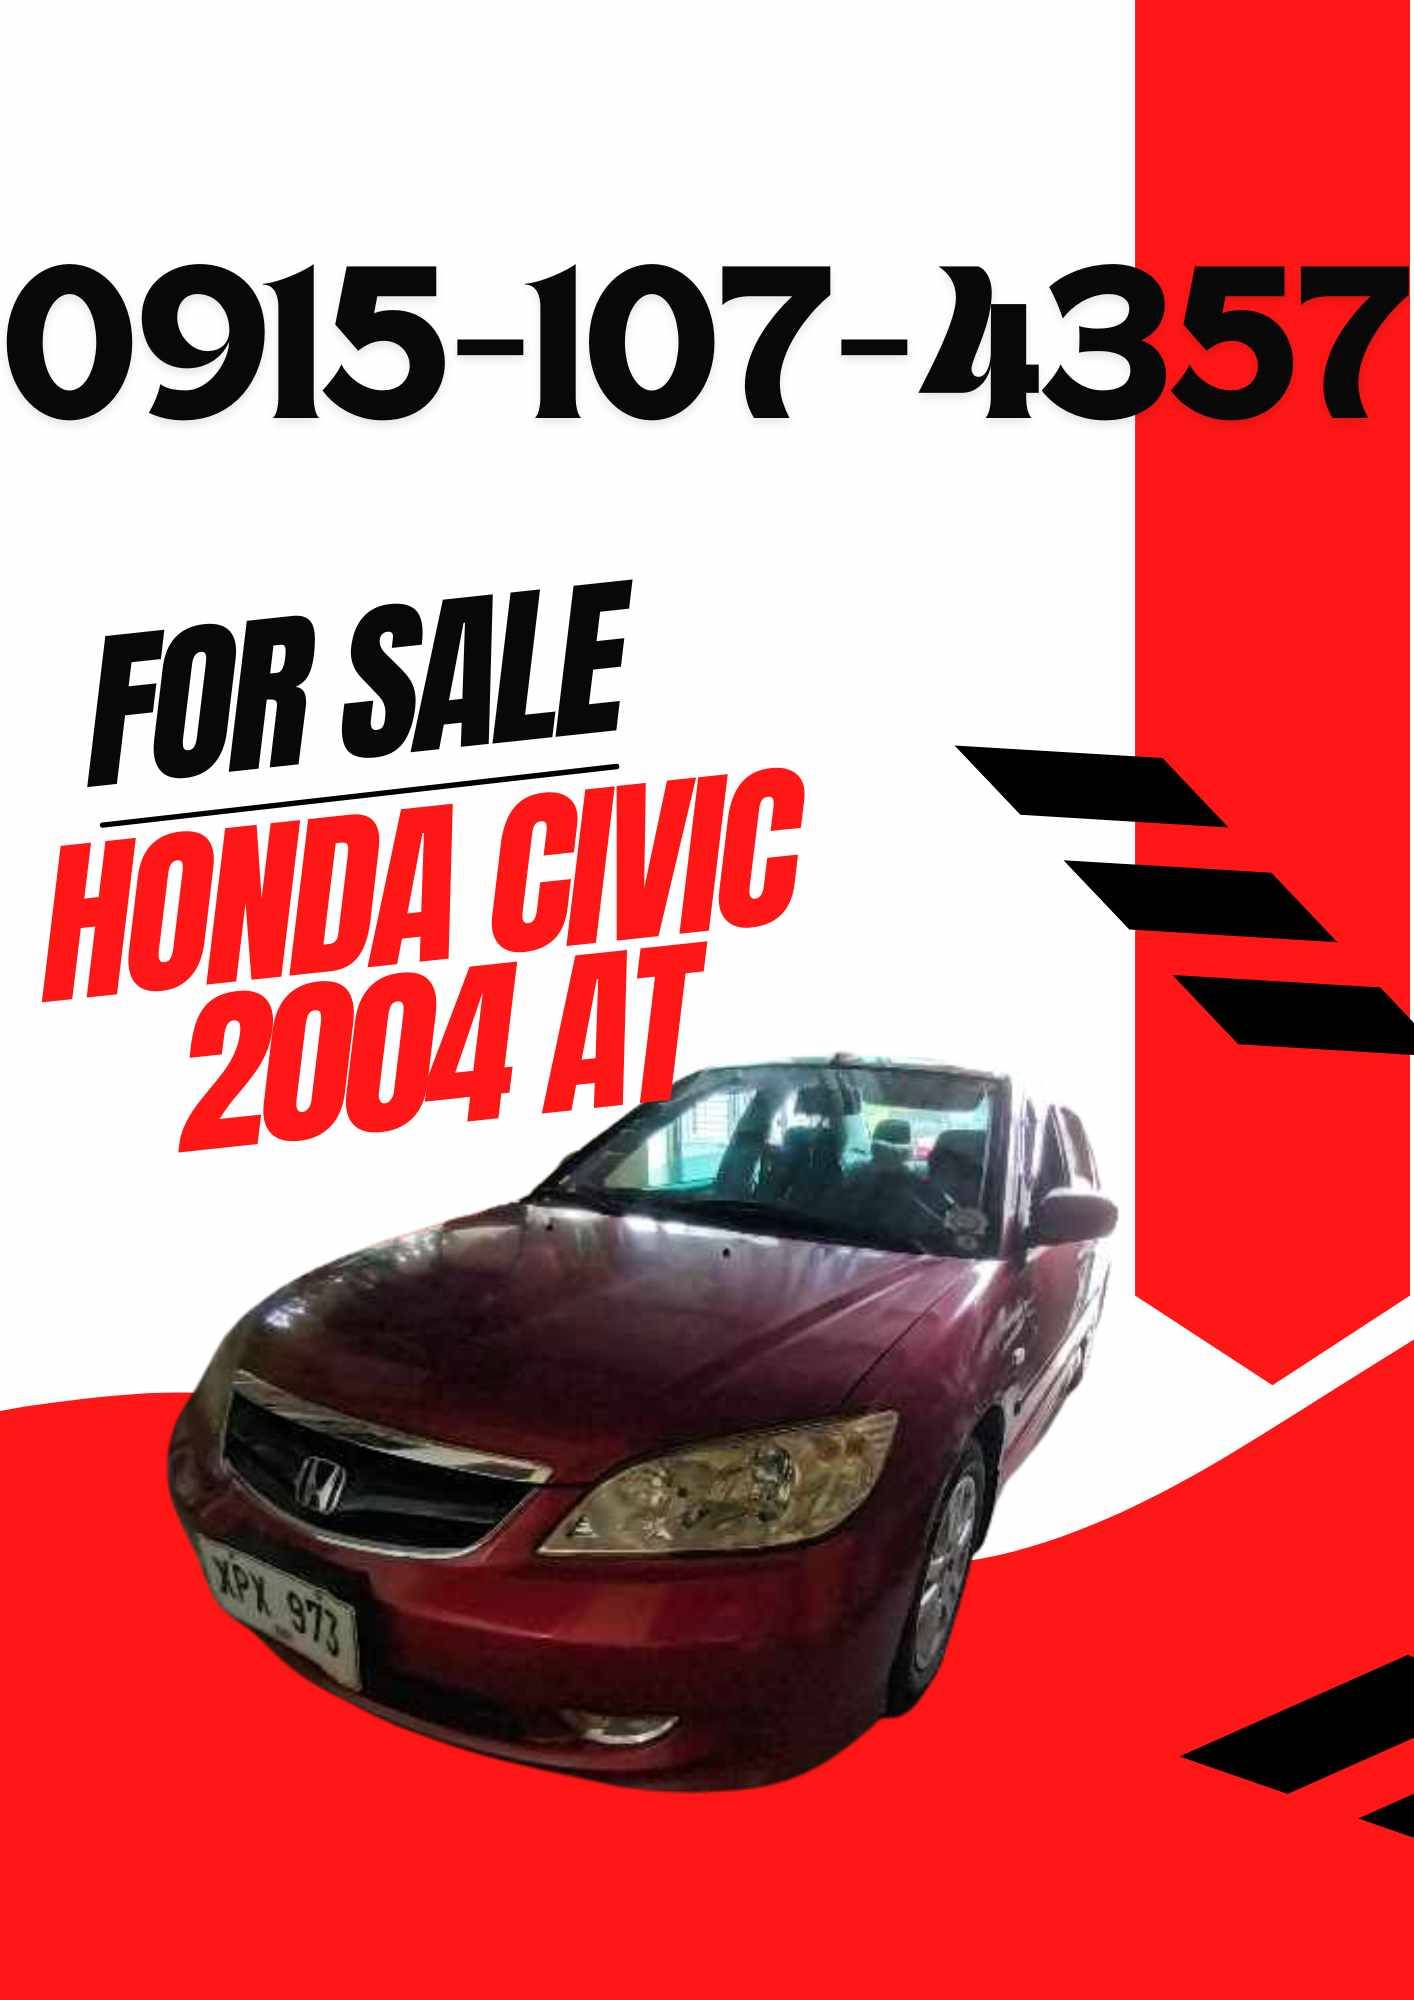 Second Hand 2004 Honda Civic